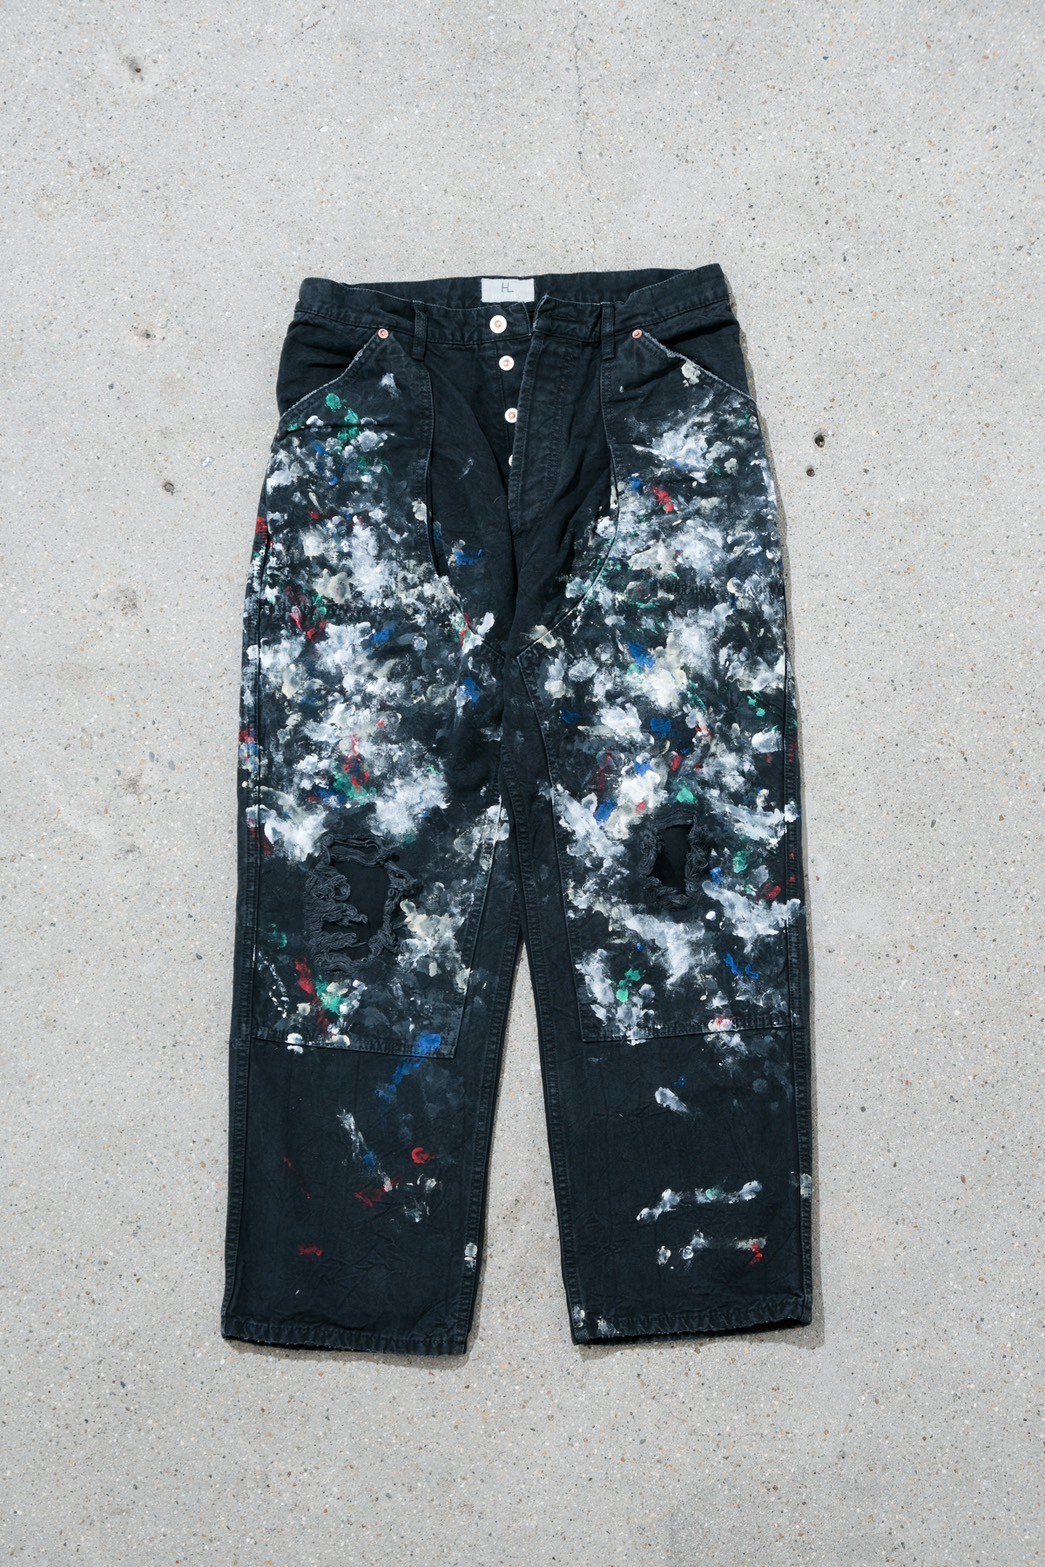 HERILL / Splash Painter pants